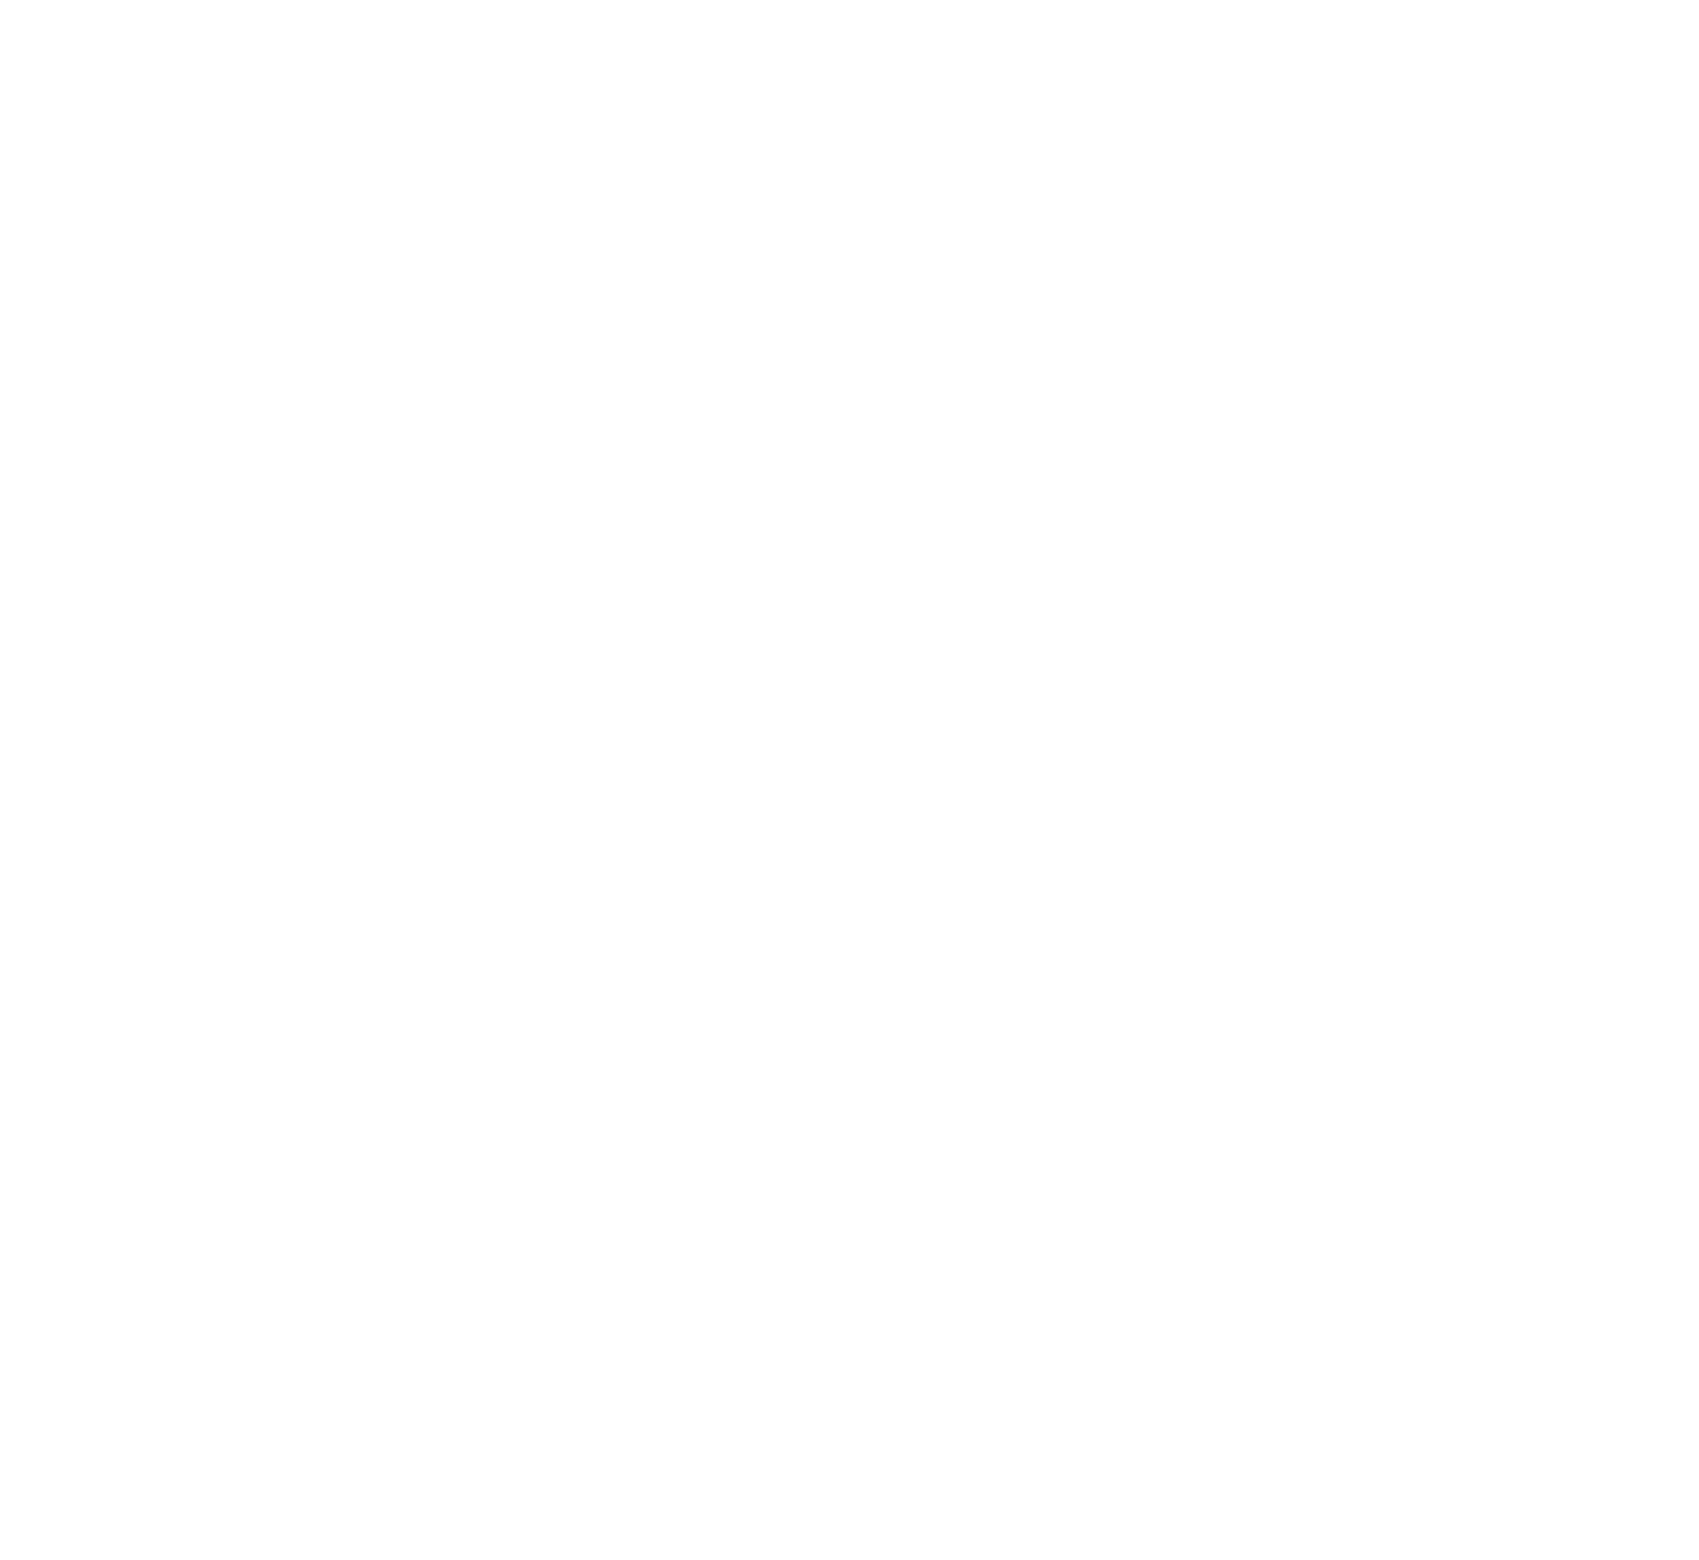 Nadia Diaz Naval